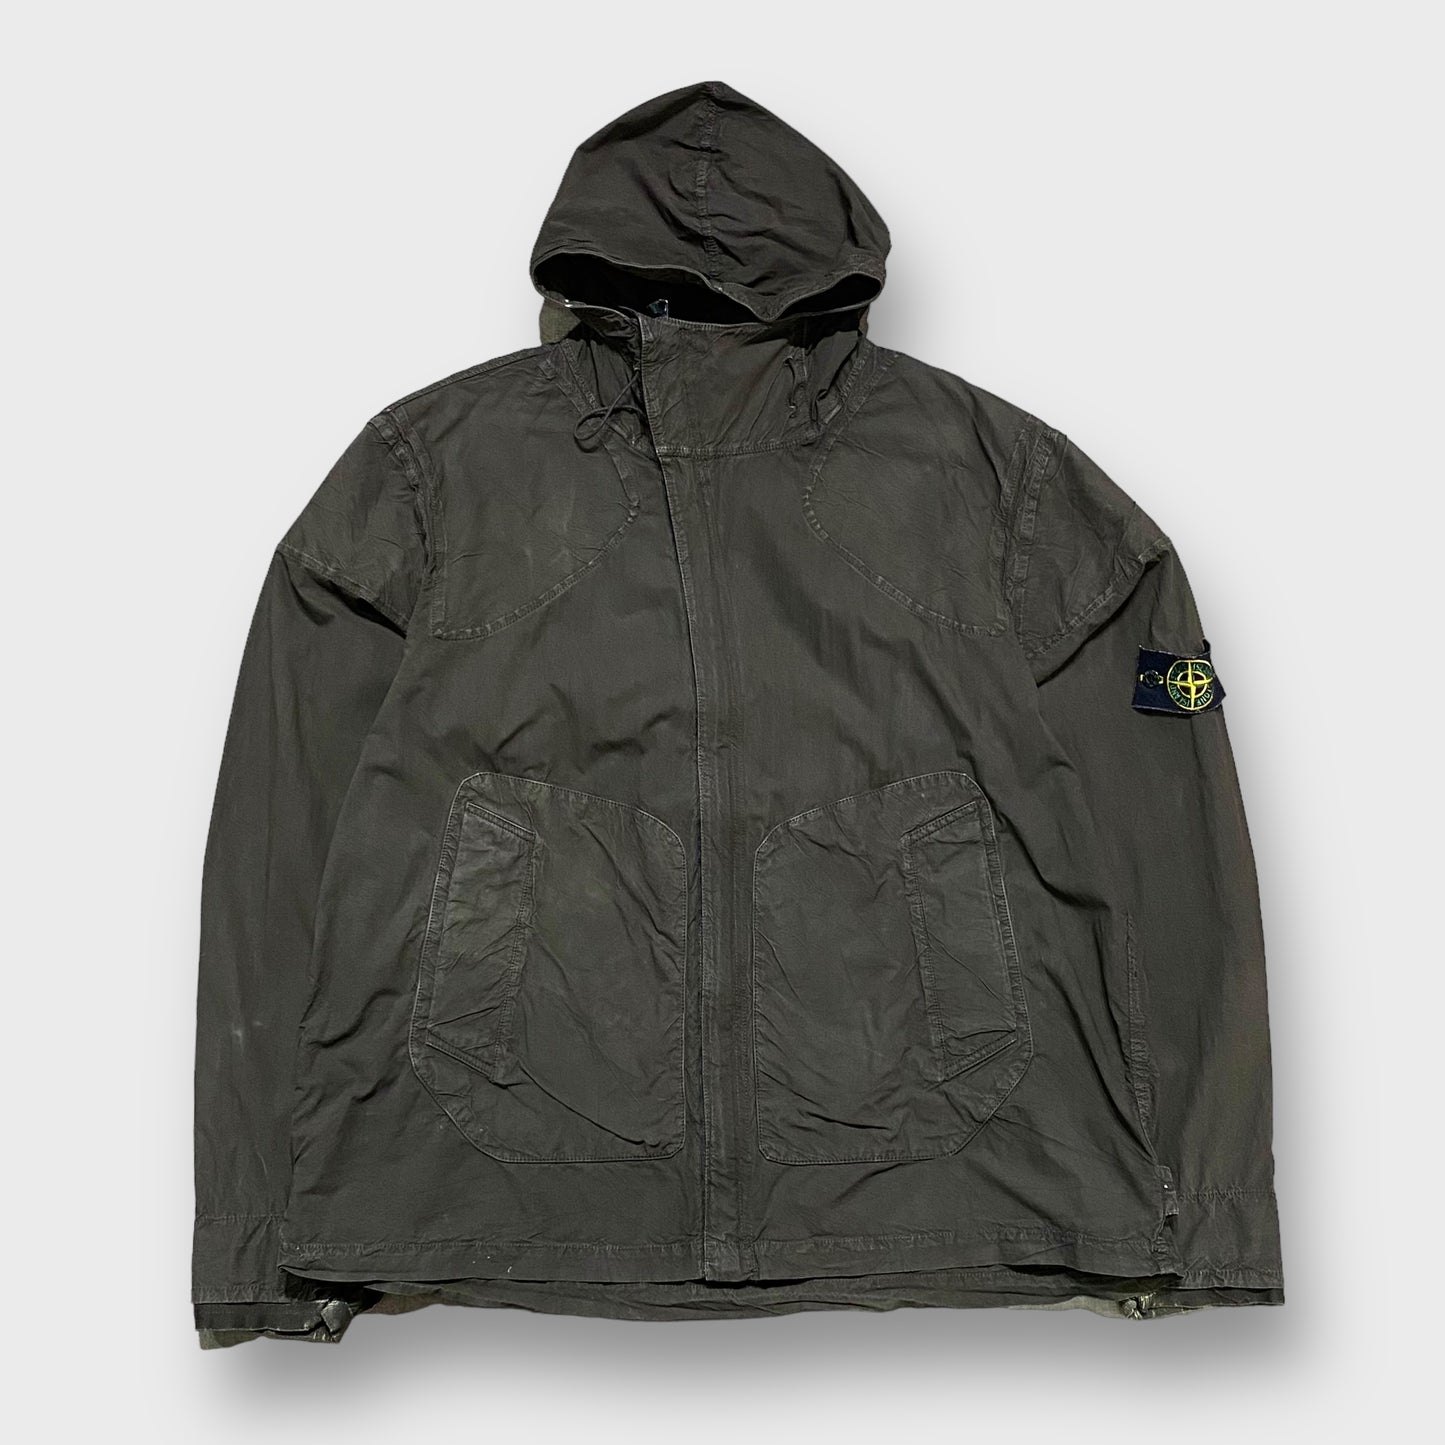 2005's S/S "STONE ISLAND" Compact treatment jacket